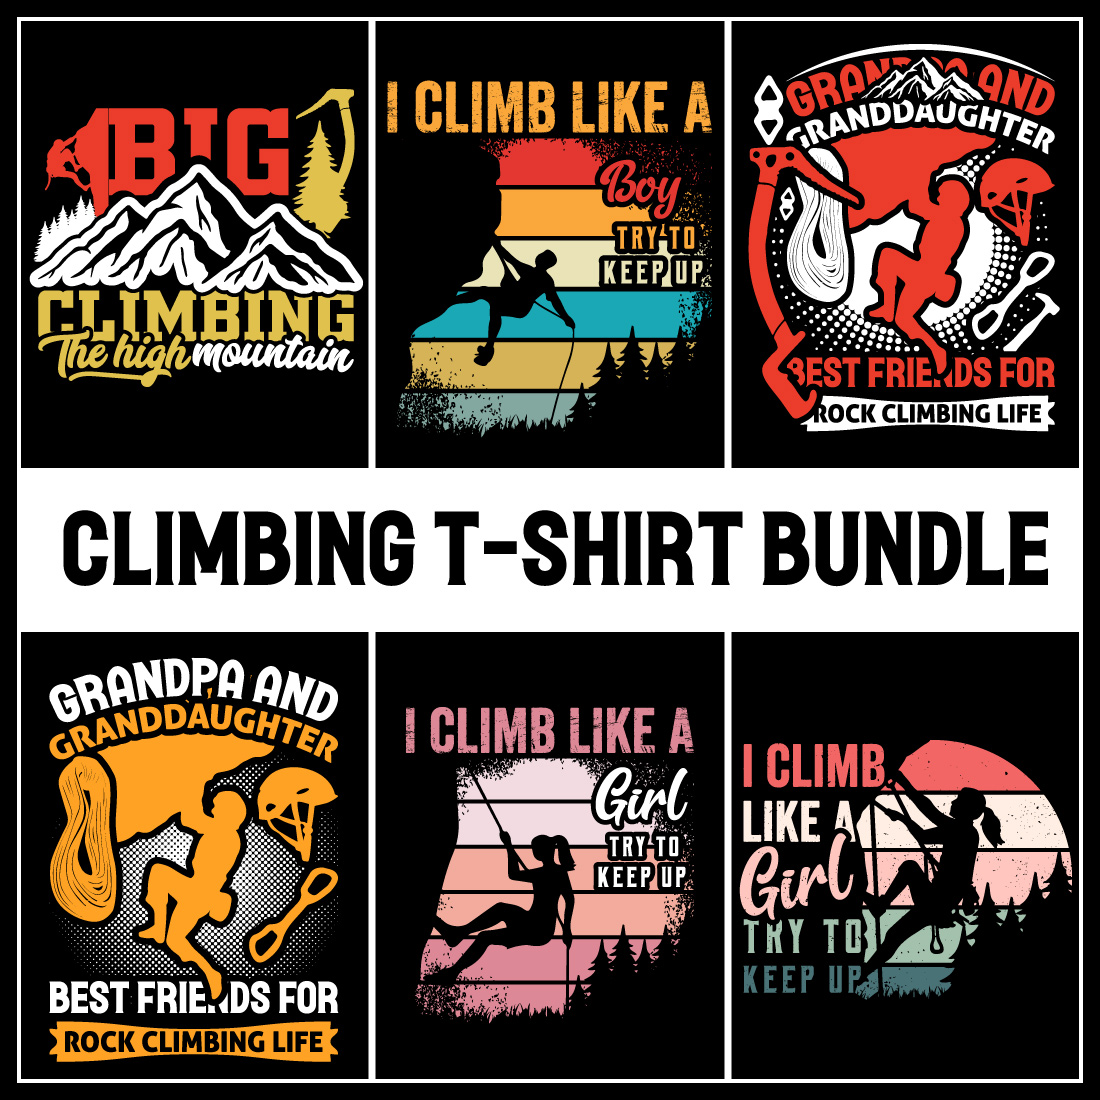 Climbing Tshirt- Hiking T-Shirt Design- Camping, Hiking, Climbing T-shirt Design cover image.